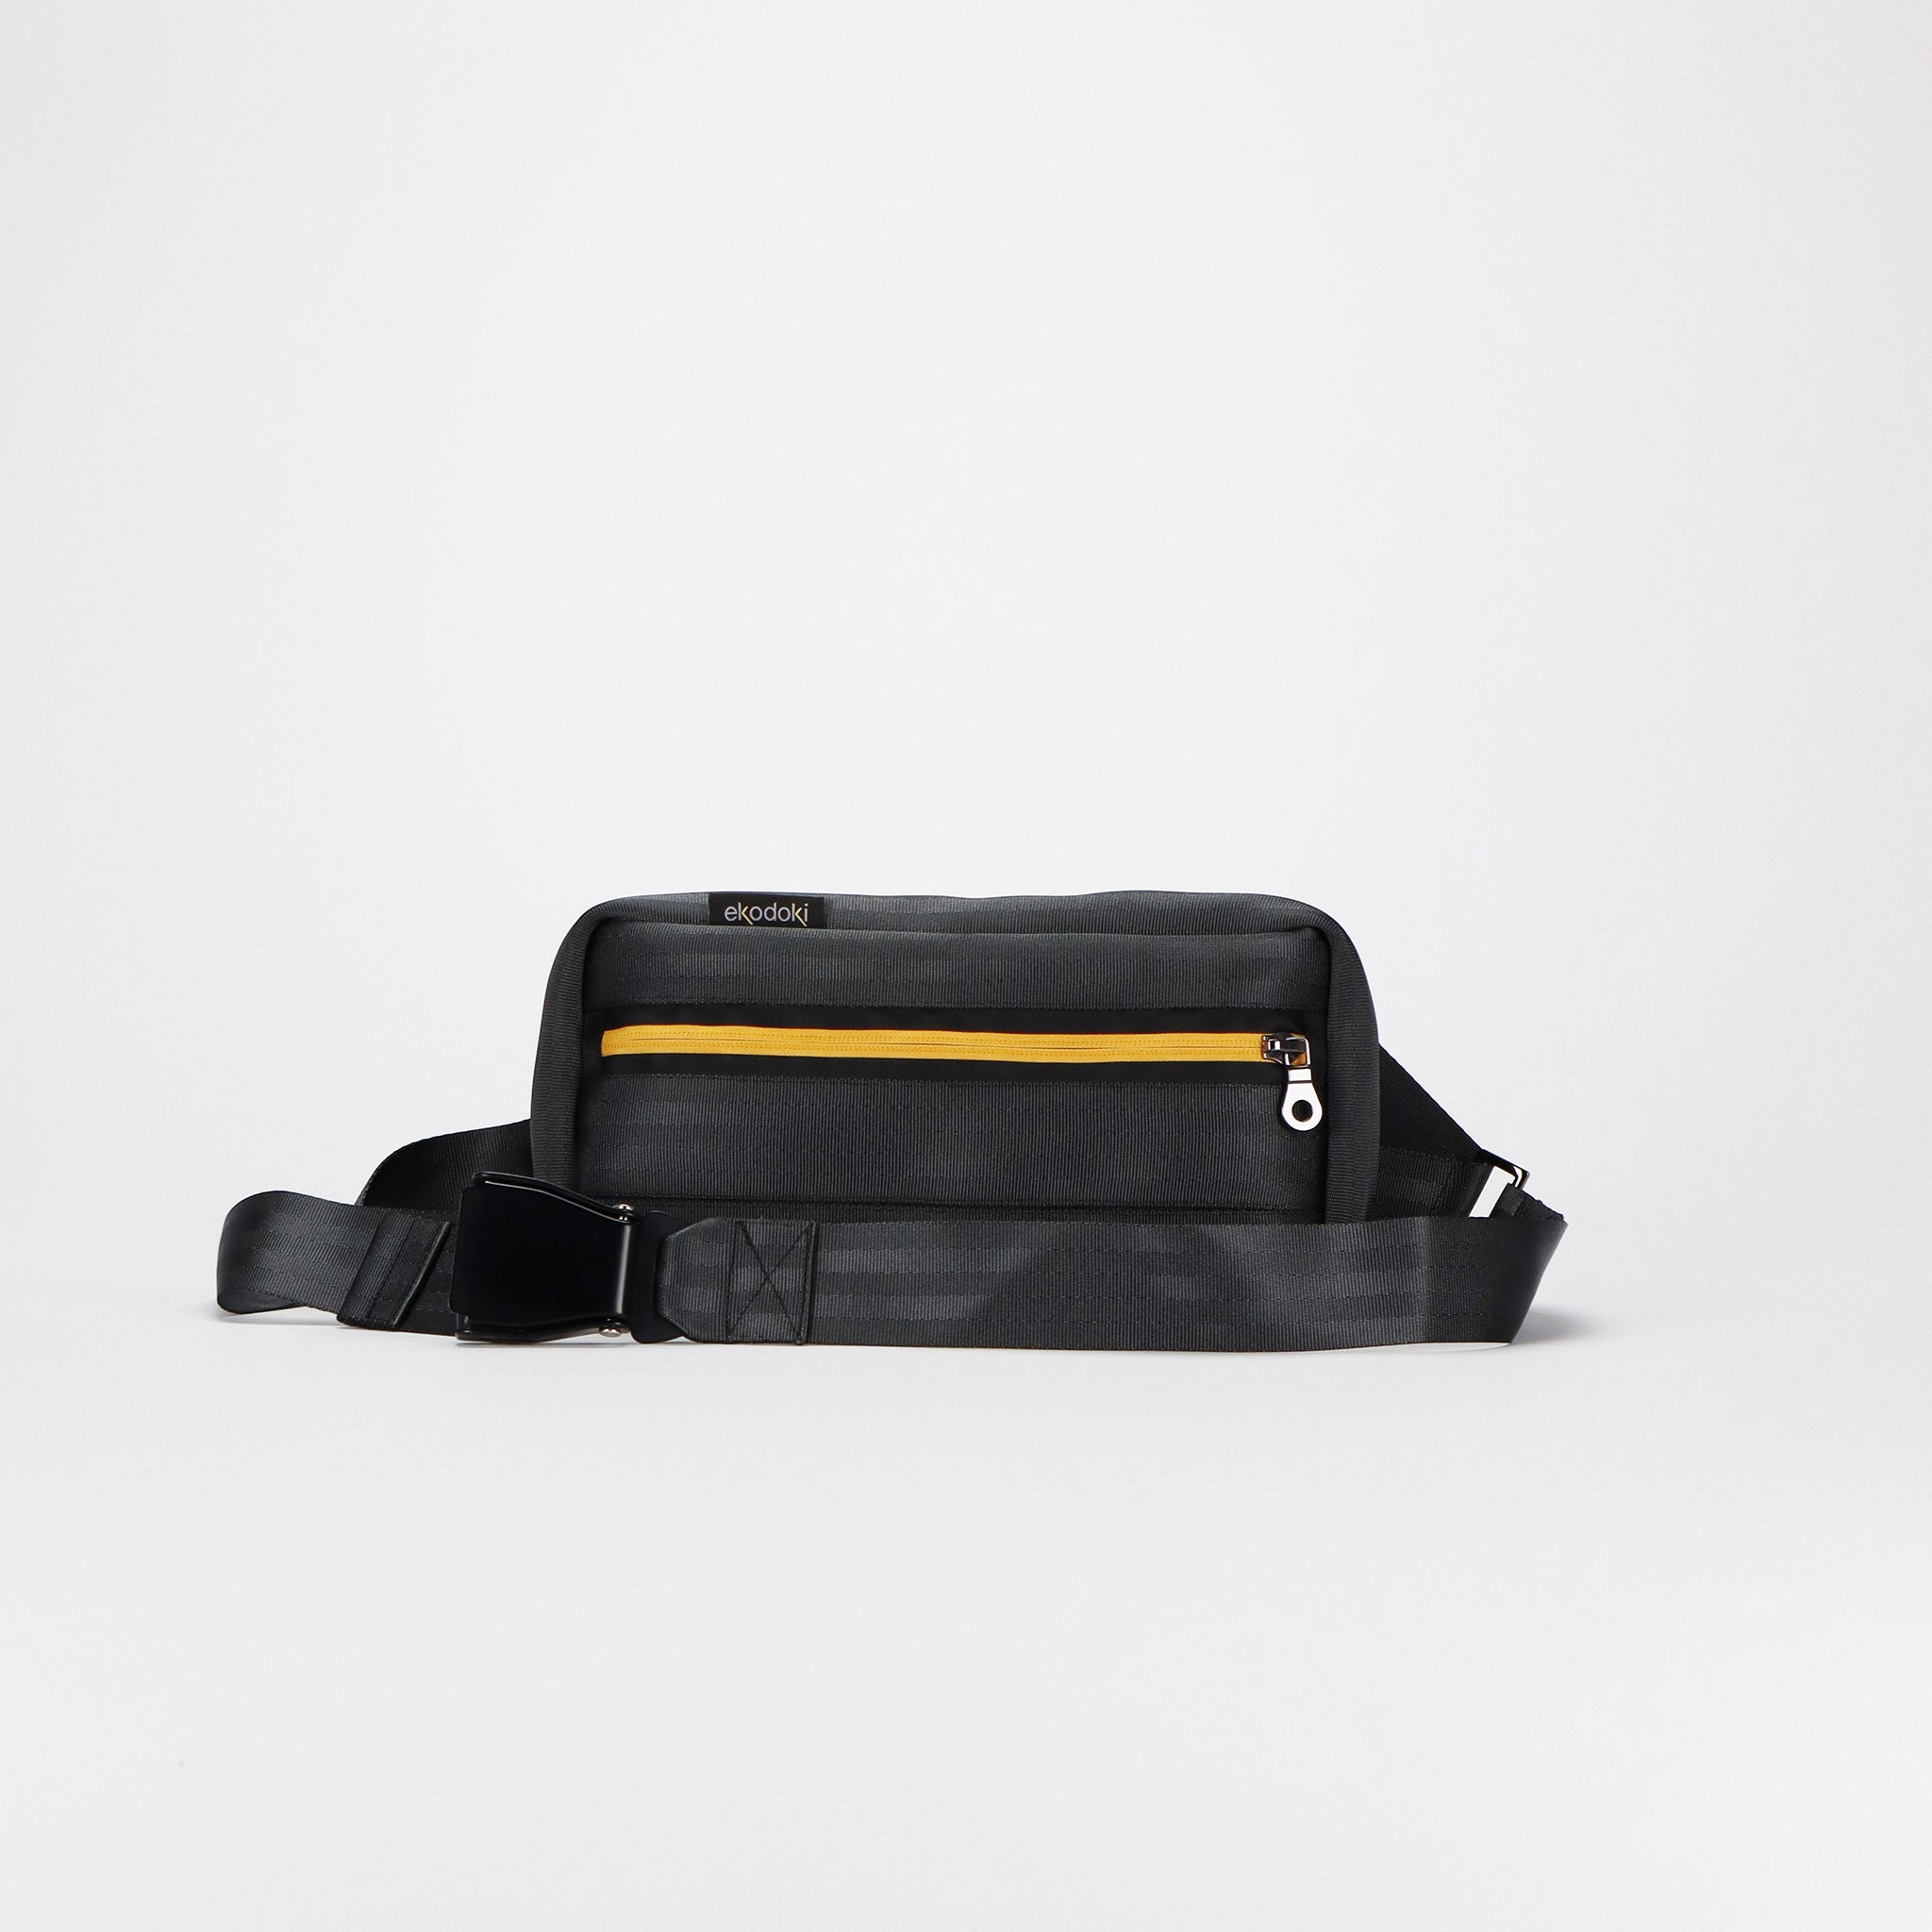 Harveys Original Seatbelt Bag Black Tote Bag Purse 100% Authentic - Women's  handbags